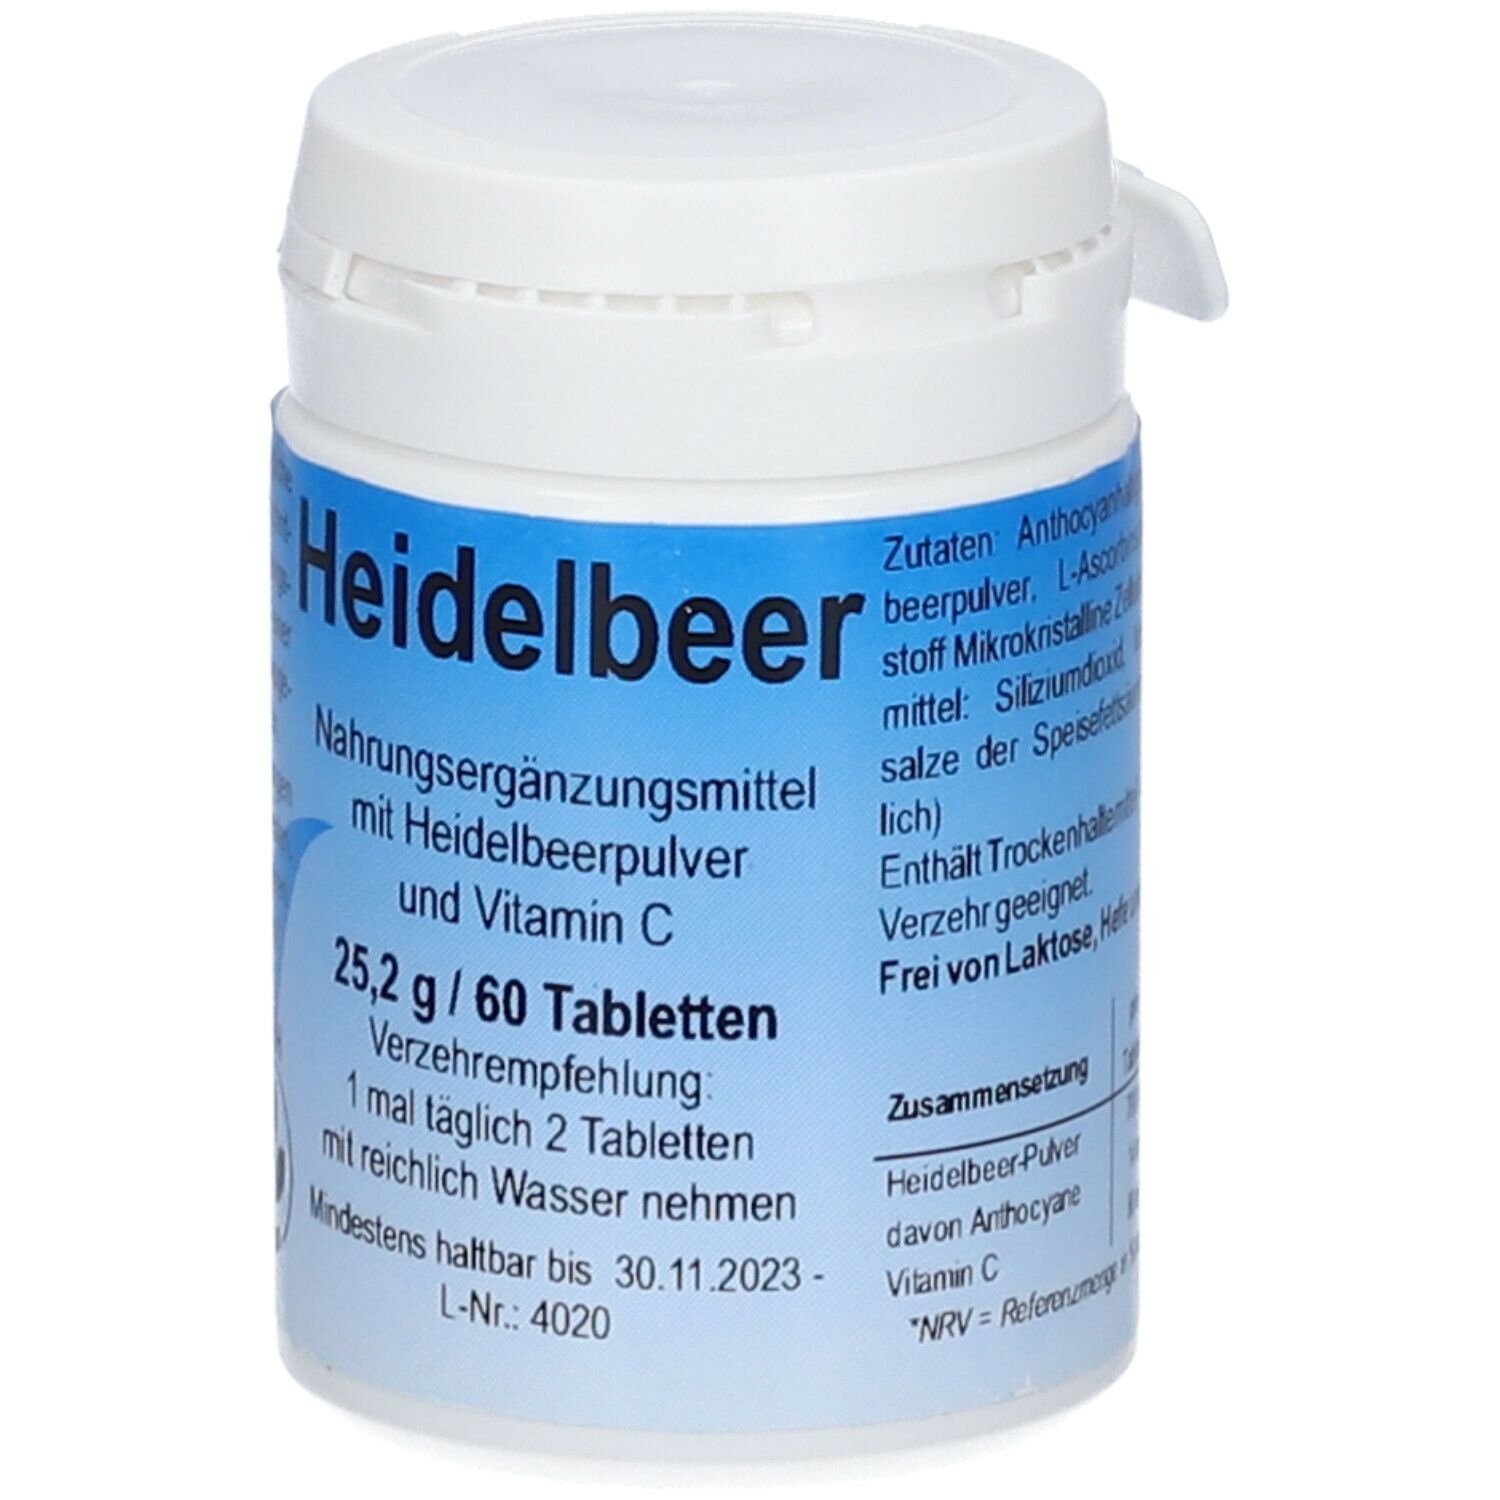 Heidelbeer Tabletten